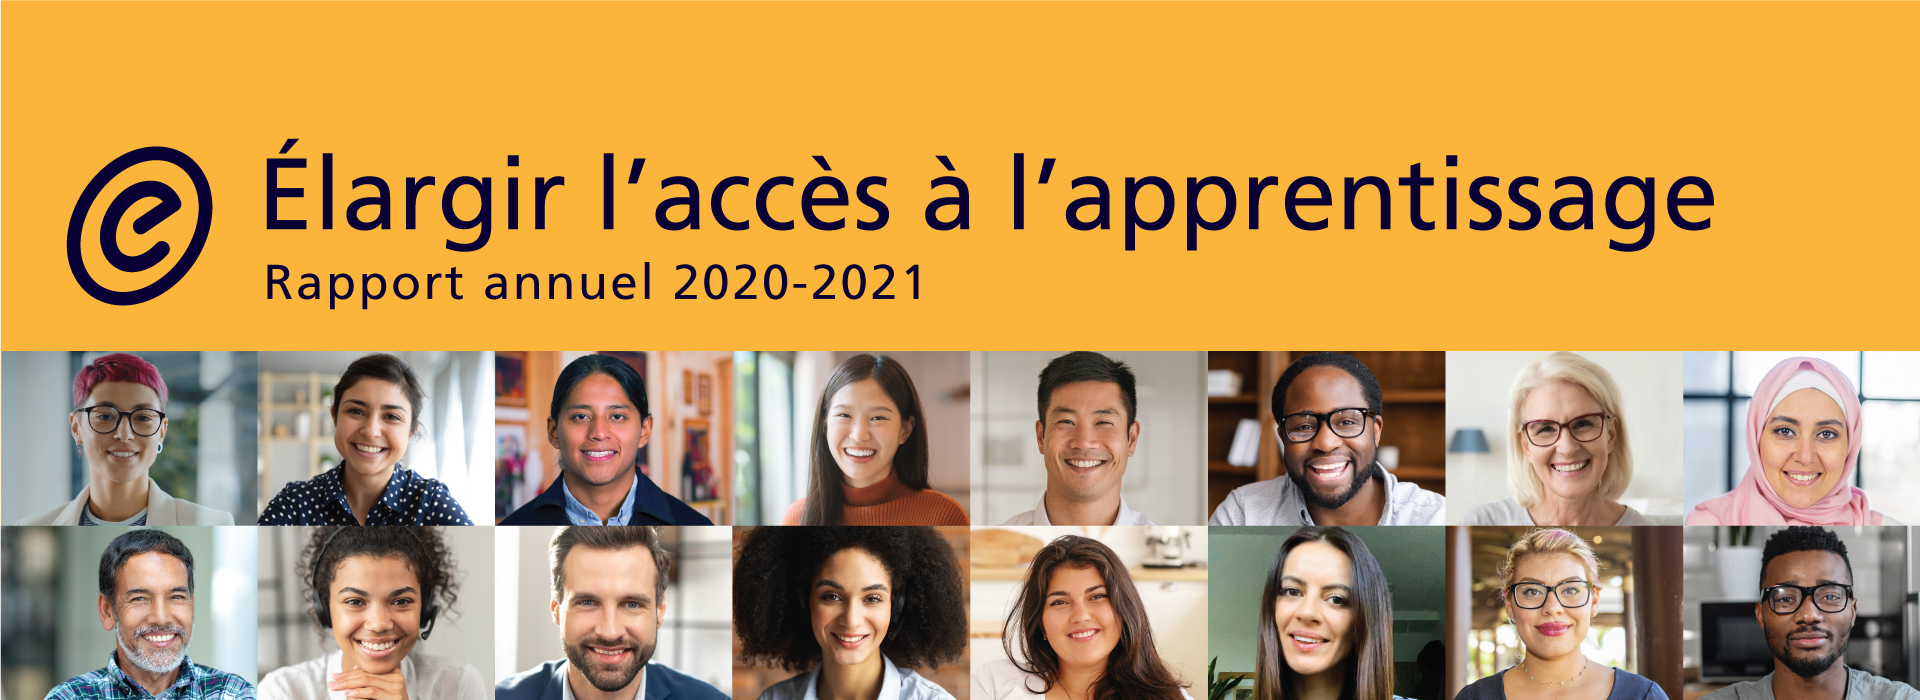 Rapport annuel 2020-2021 : Élargir l’accès à l’apprentissage